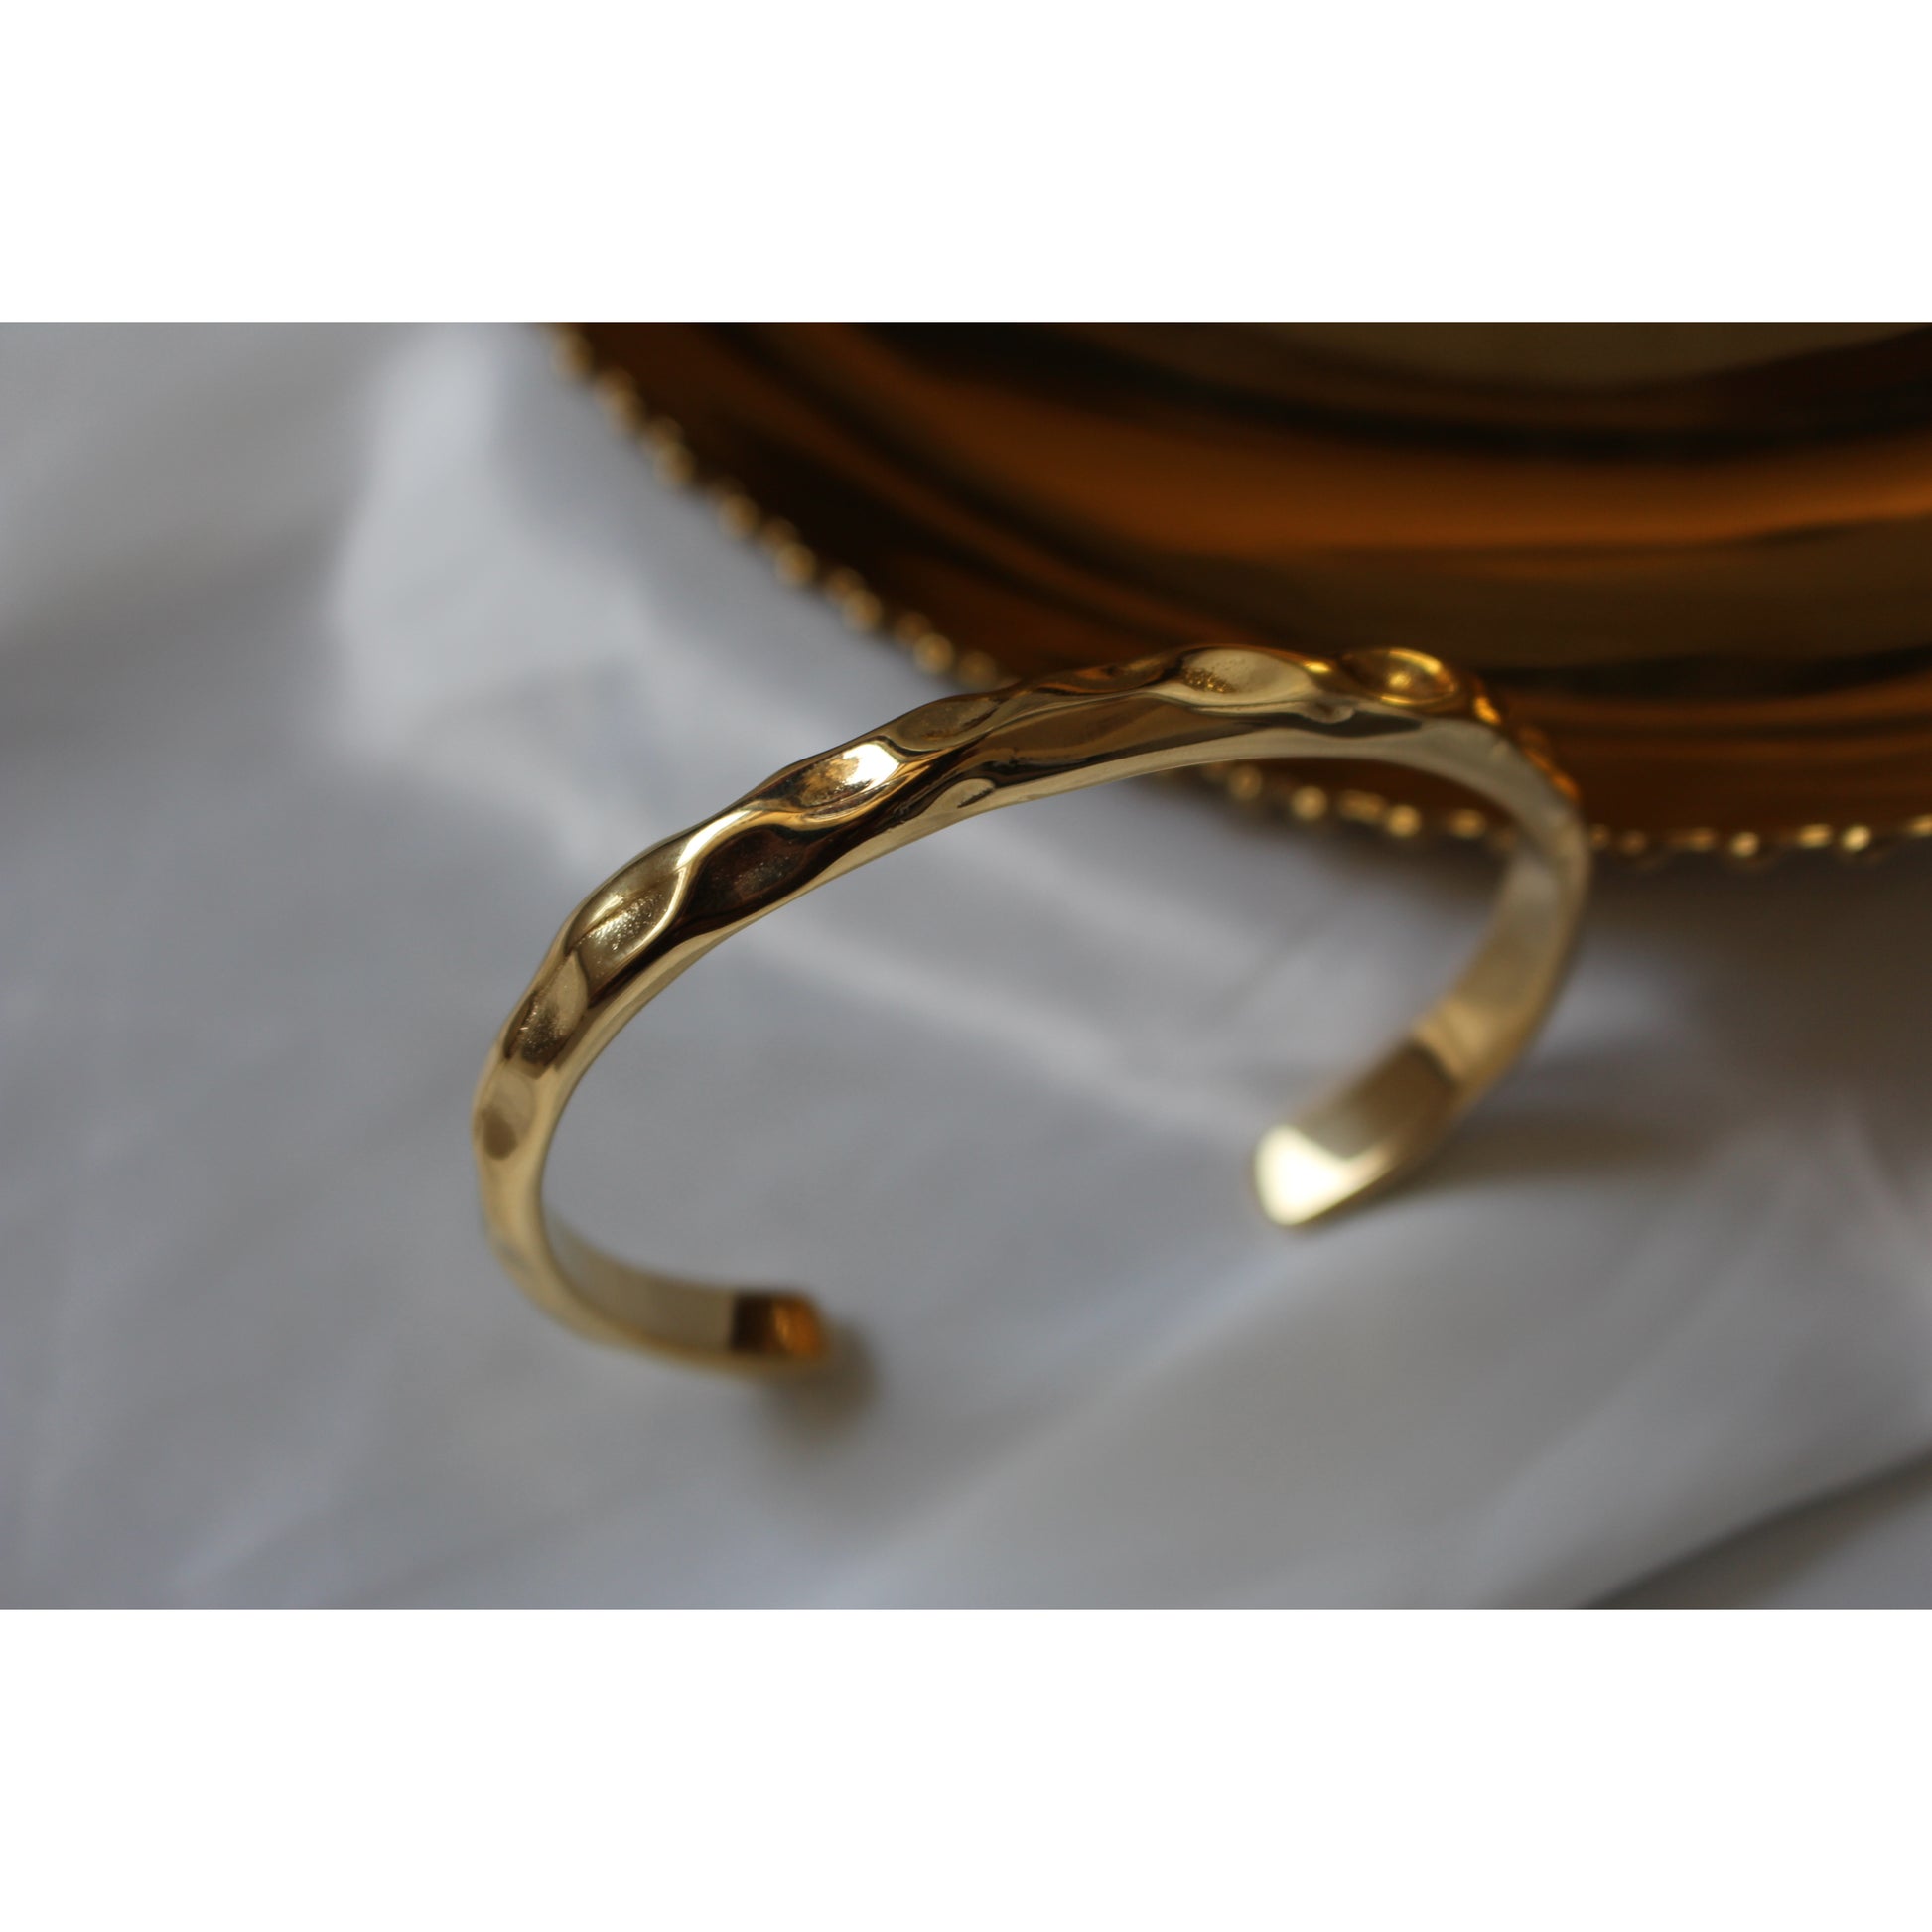 Viana Armreif Armband Yasemen Store Schmuck Accessoires Edelstahl Stainless Steel PVD Vergoldet Gold jewel jewelry bracelet